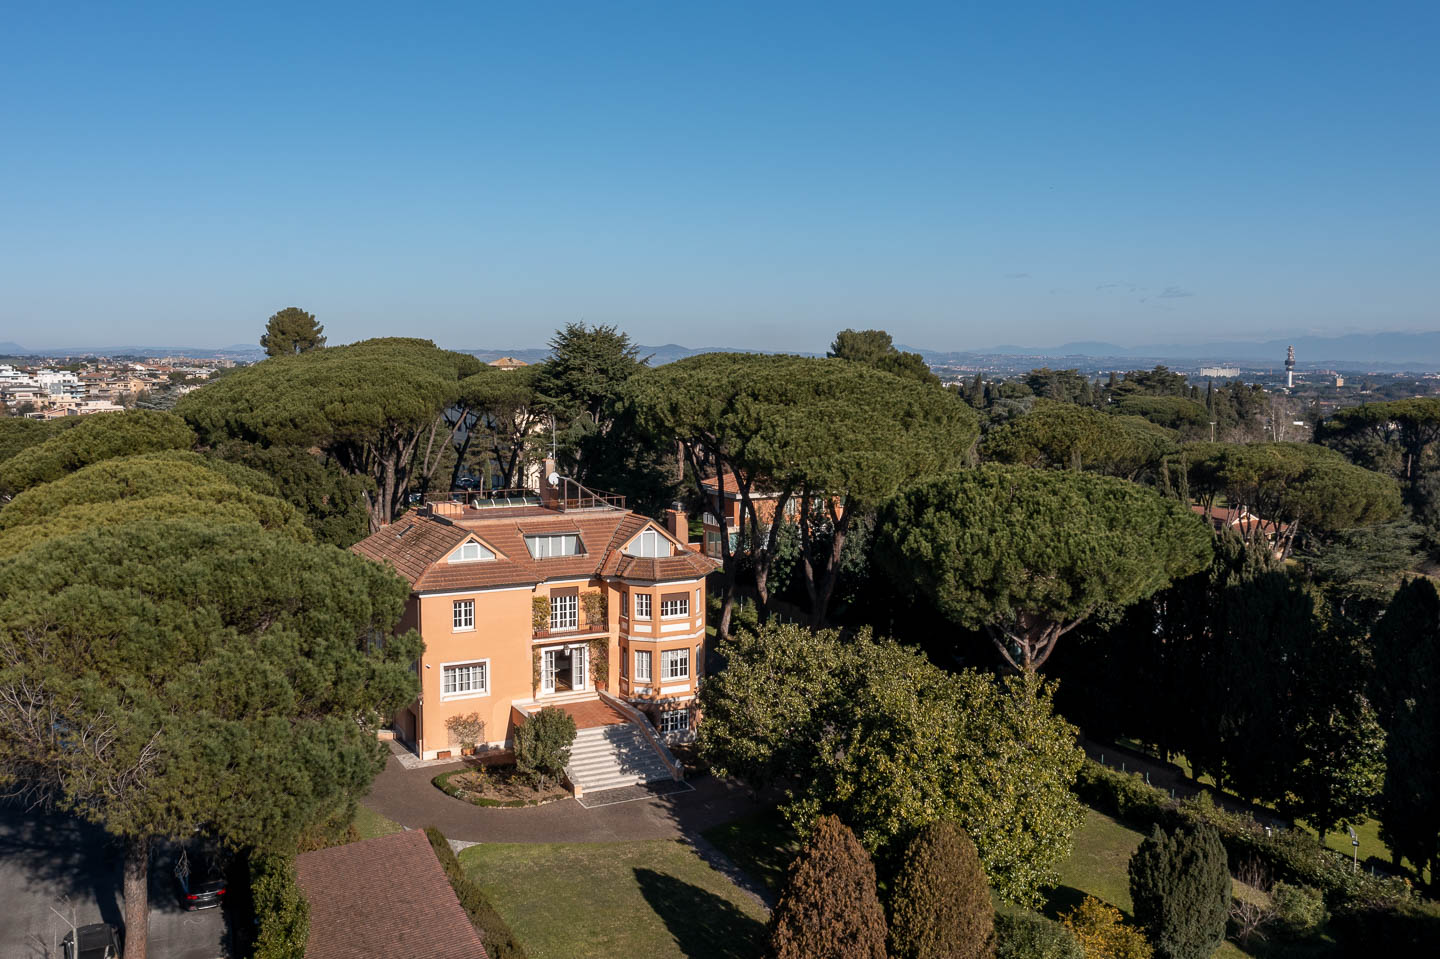 Discover a slice of fashion history: Gucci family's exquisite Roman villa up for sale